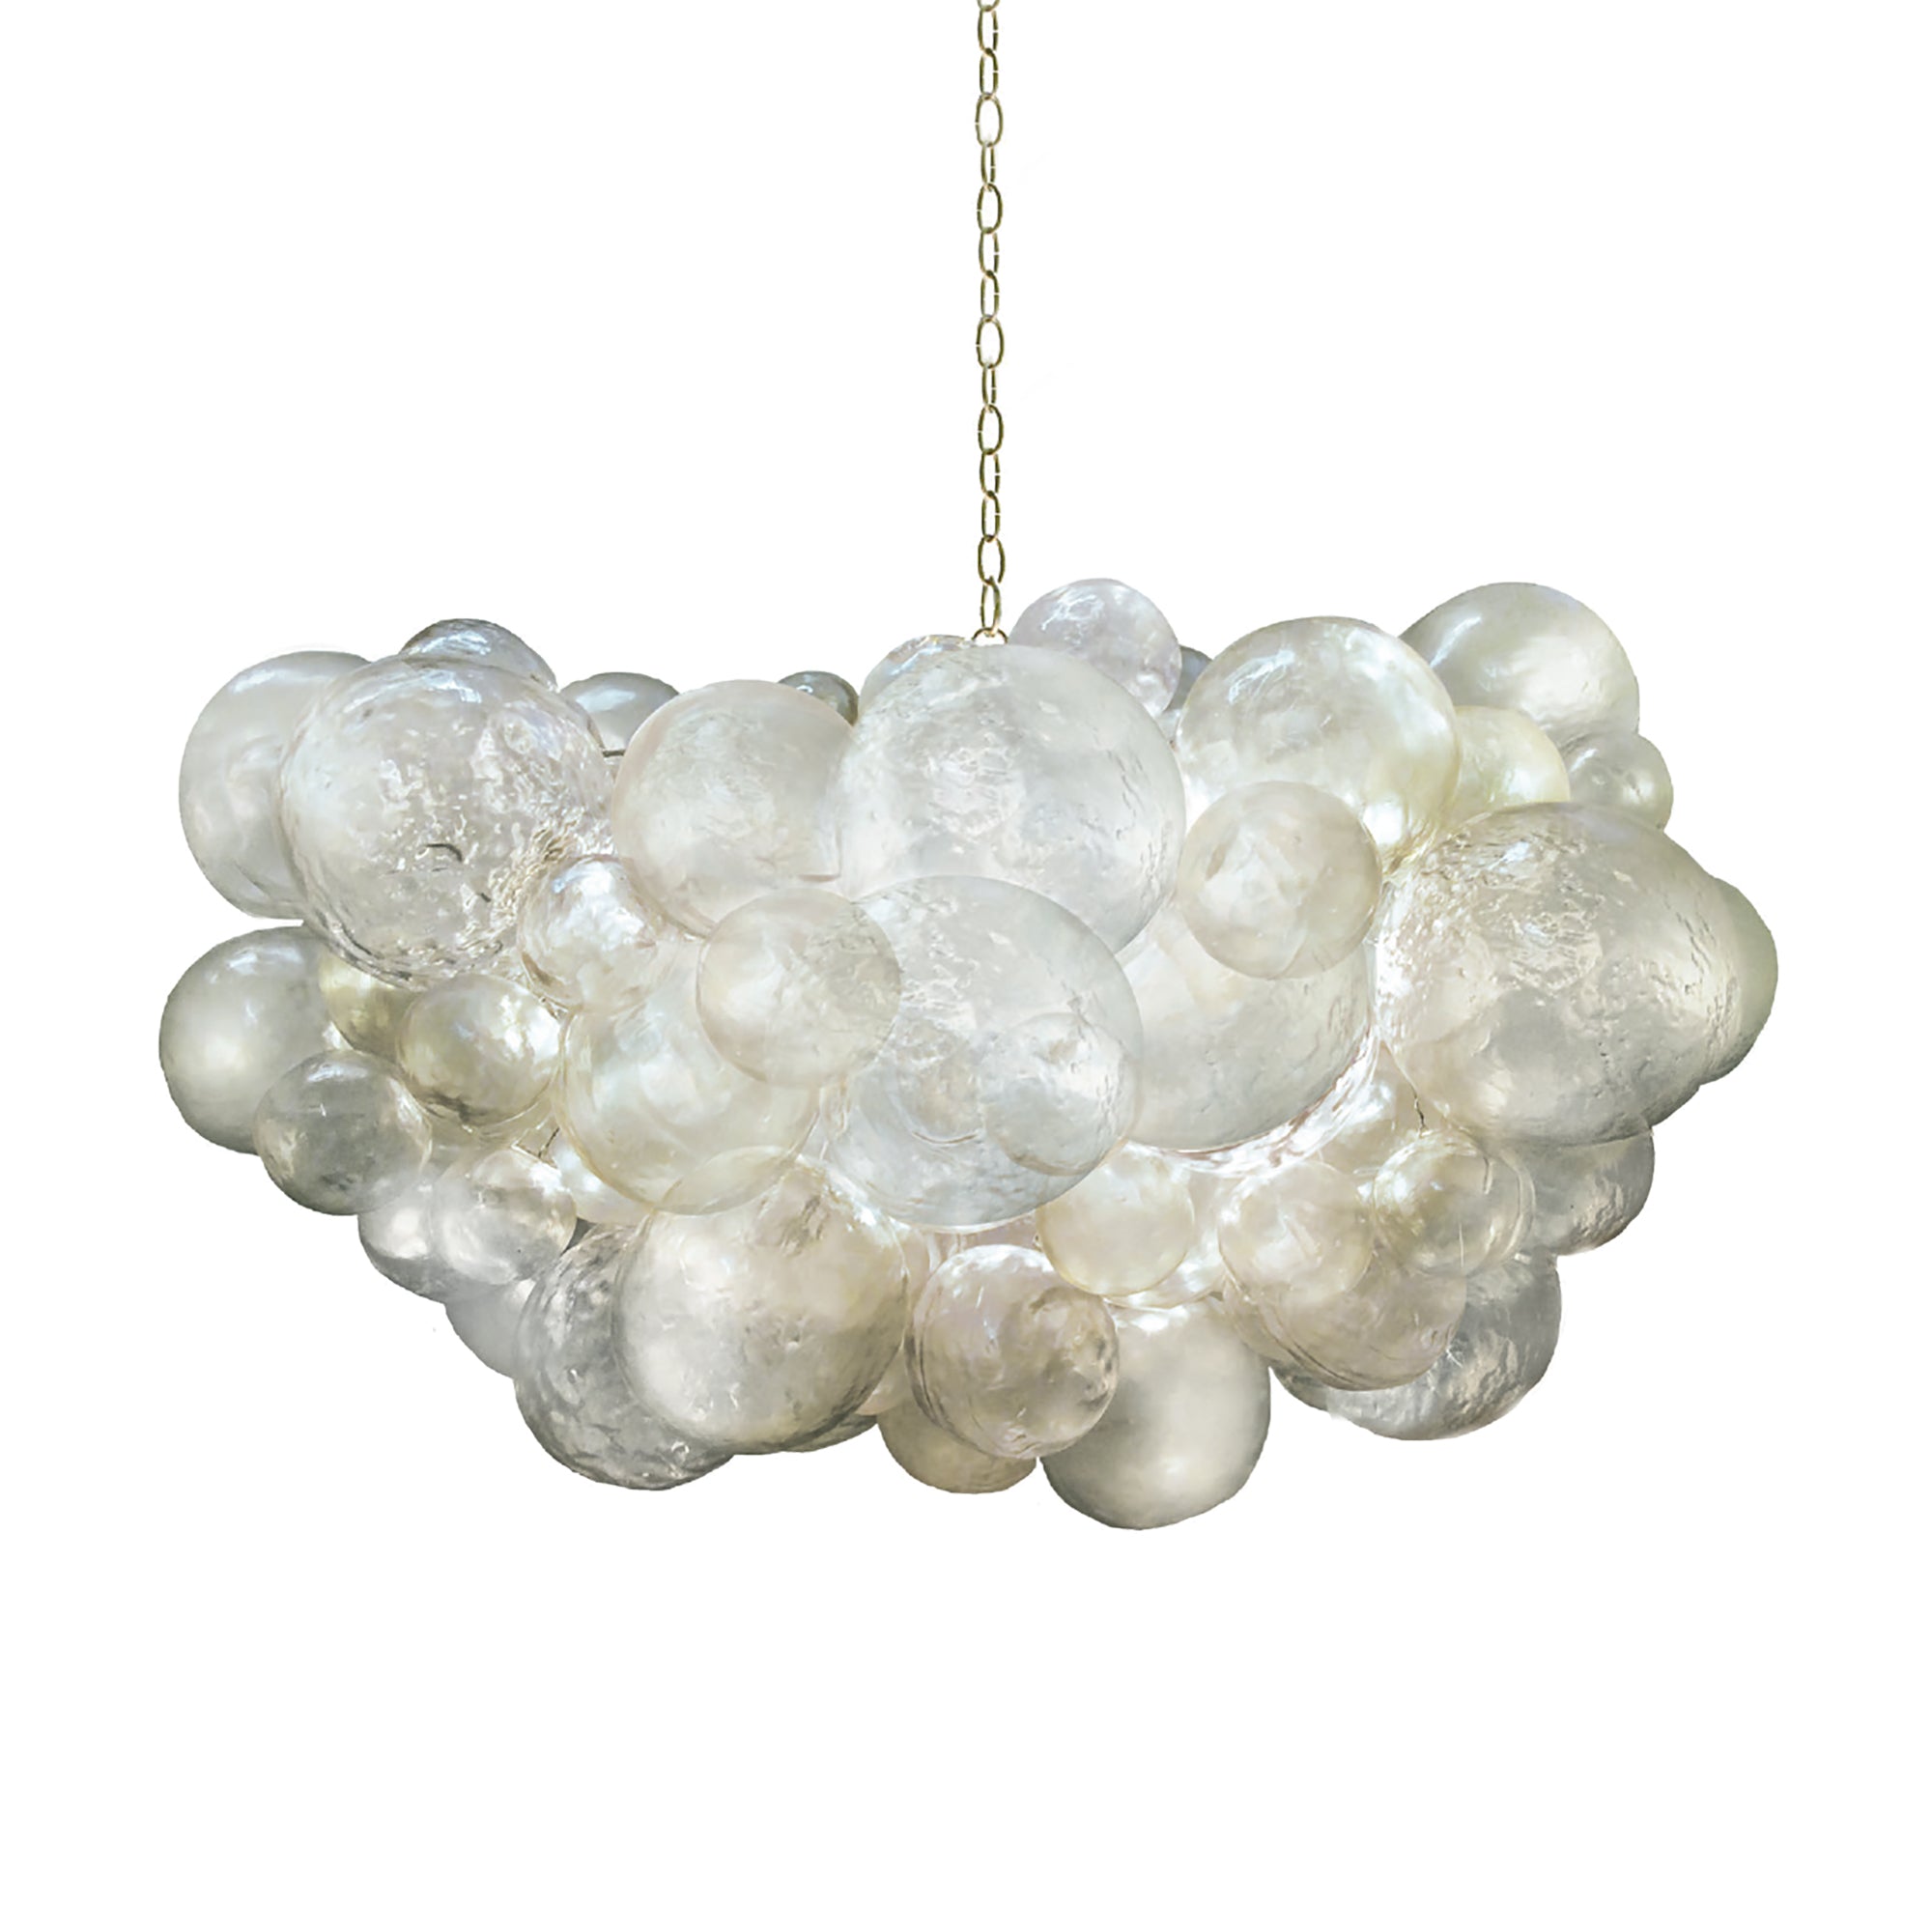 resin cloud chandelier hanging from metallic chain